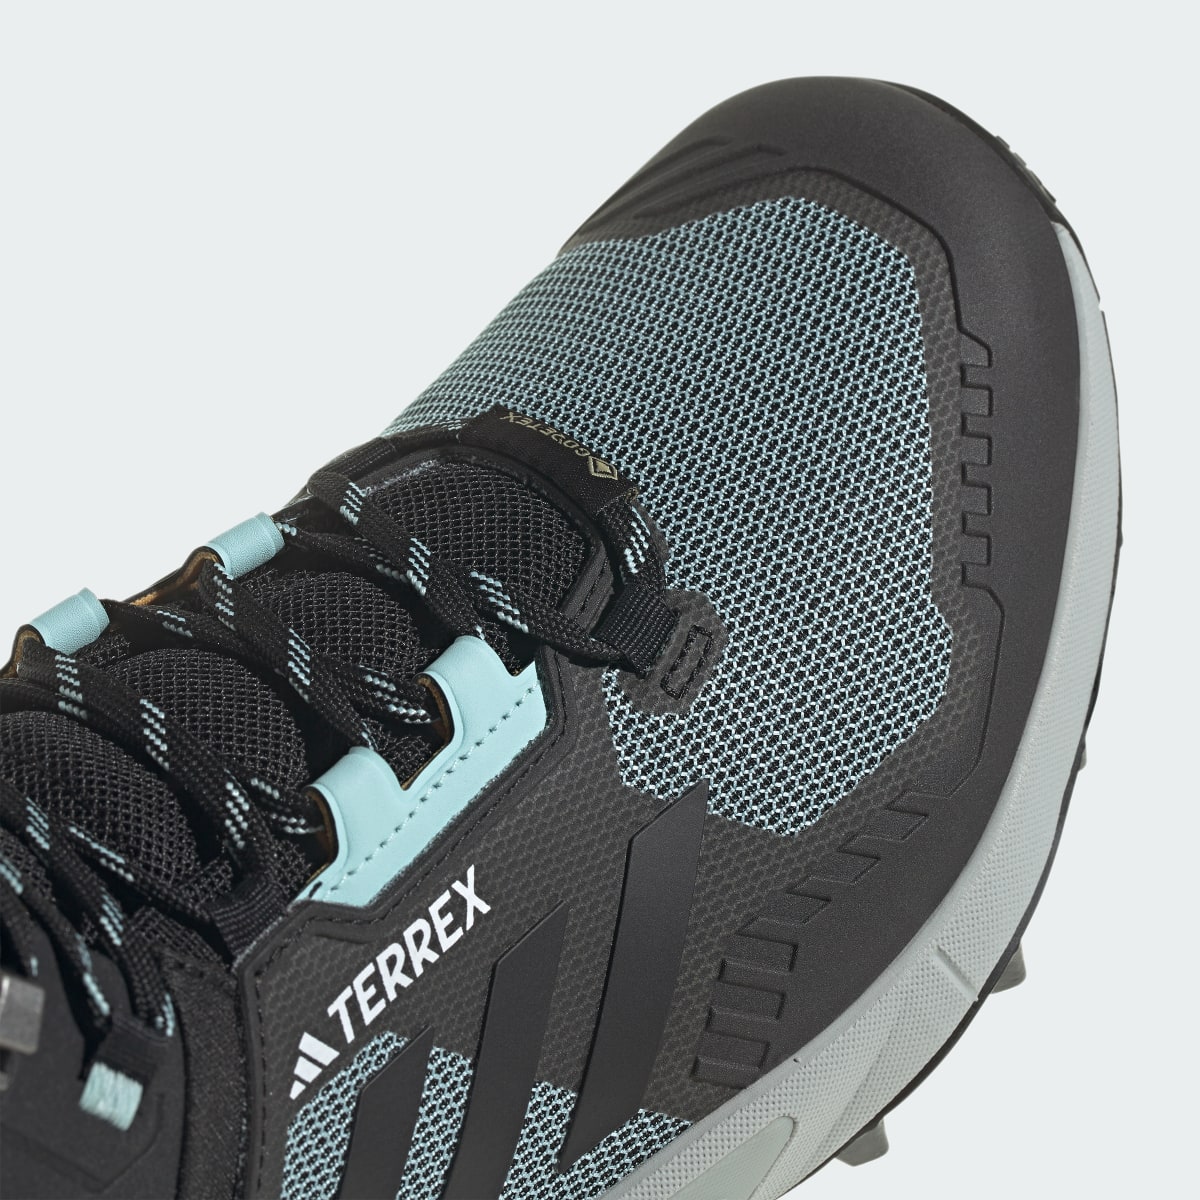 Adidas Terrex Swift R3 Mid GORE-TEX Hiking Shoes. 8